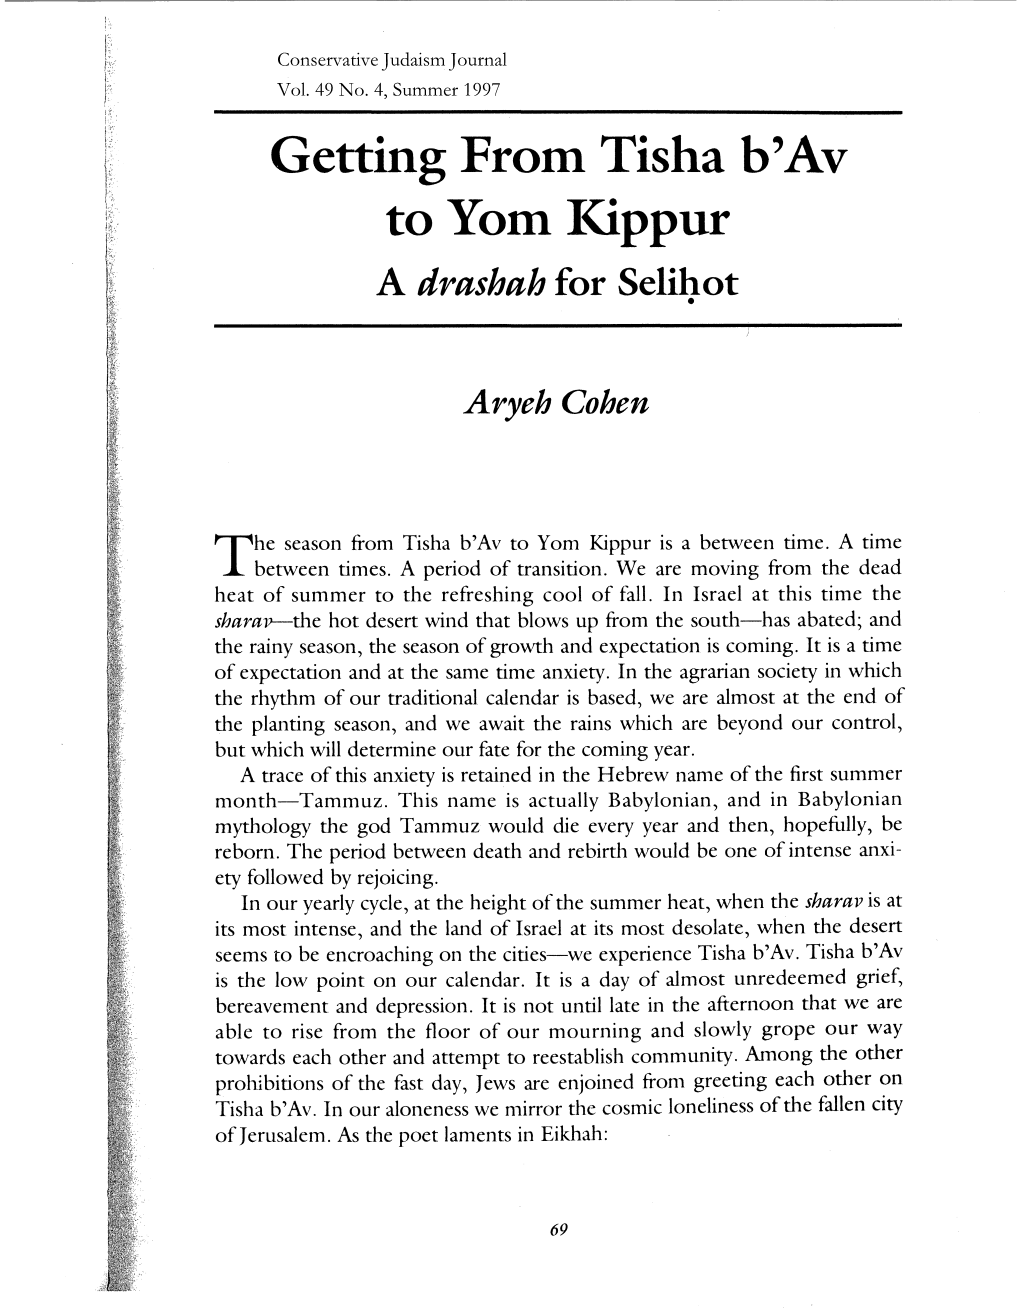 Getting from Tisha B' Av to Yom Kippur